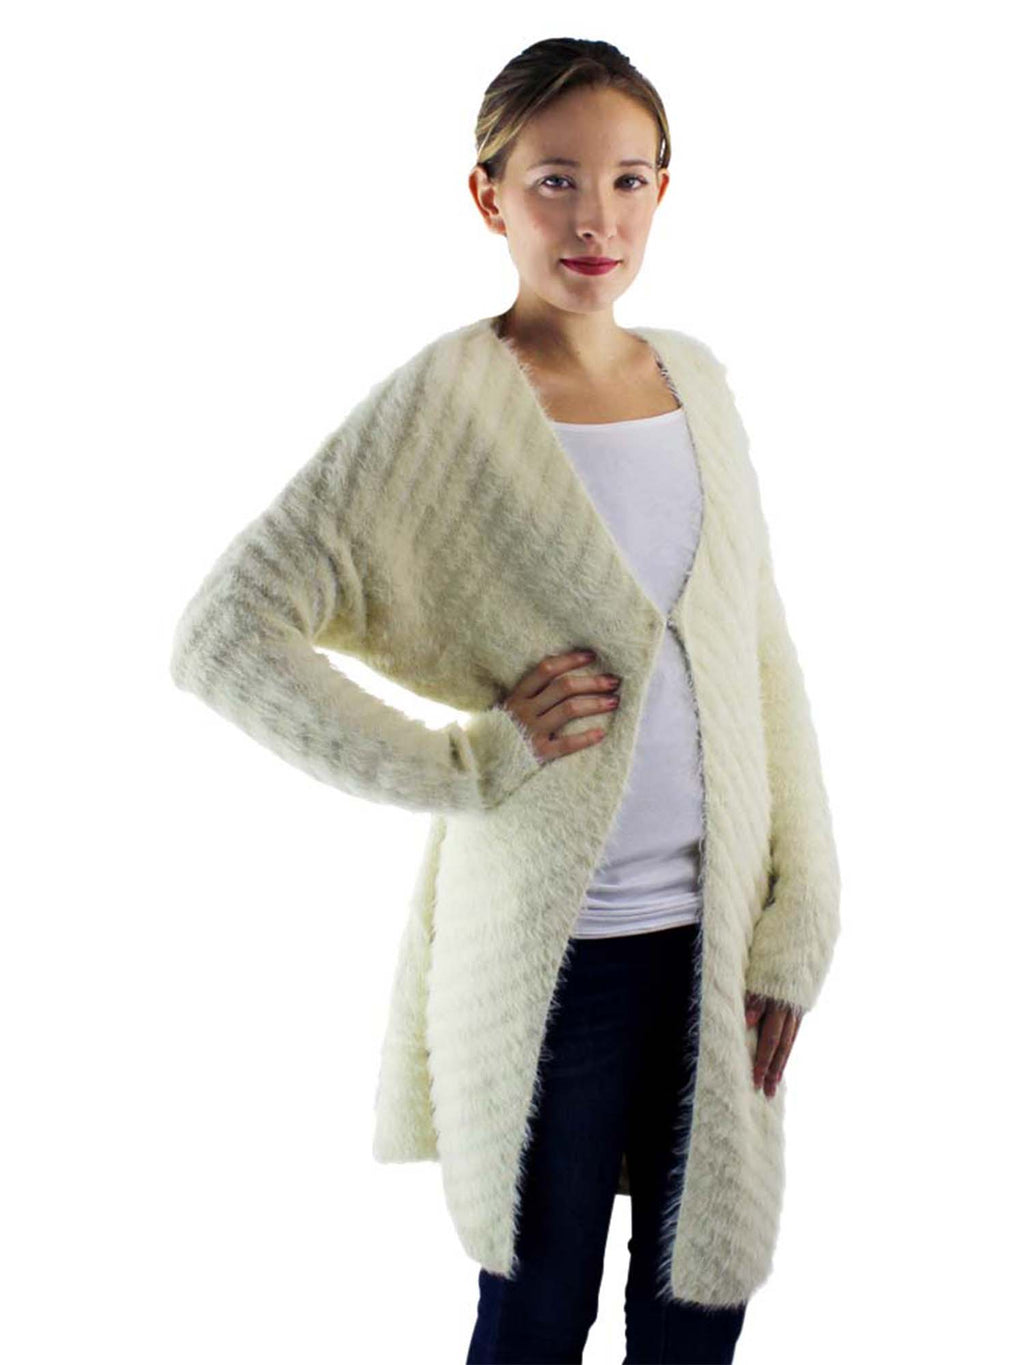 Fuzzy Knit Long Sleeve Cardigan Sweater Coat